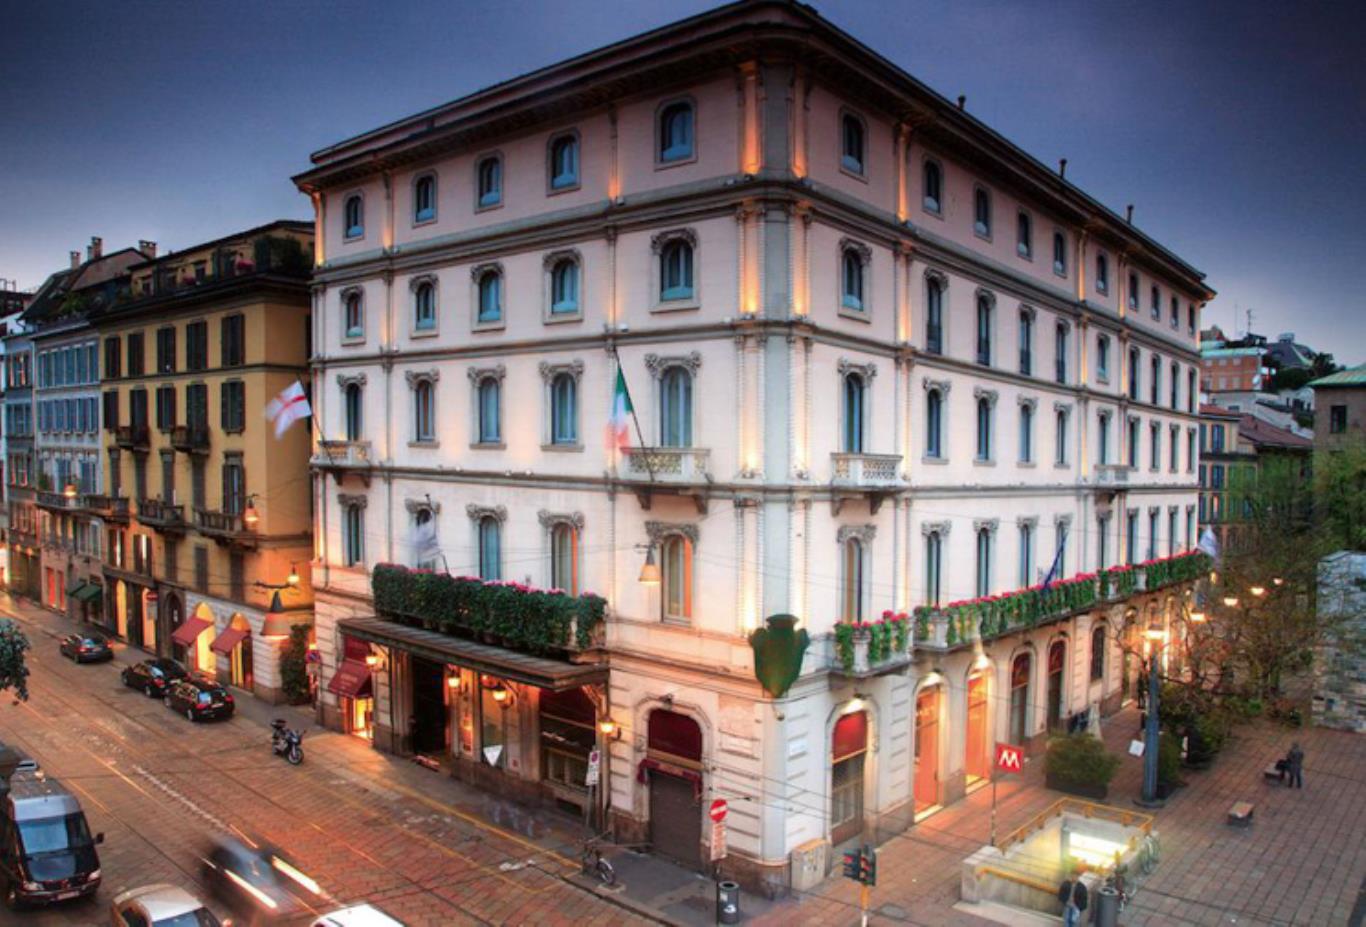 Current image of the exterior of Grand Hotel et de Milan in Milan